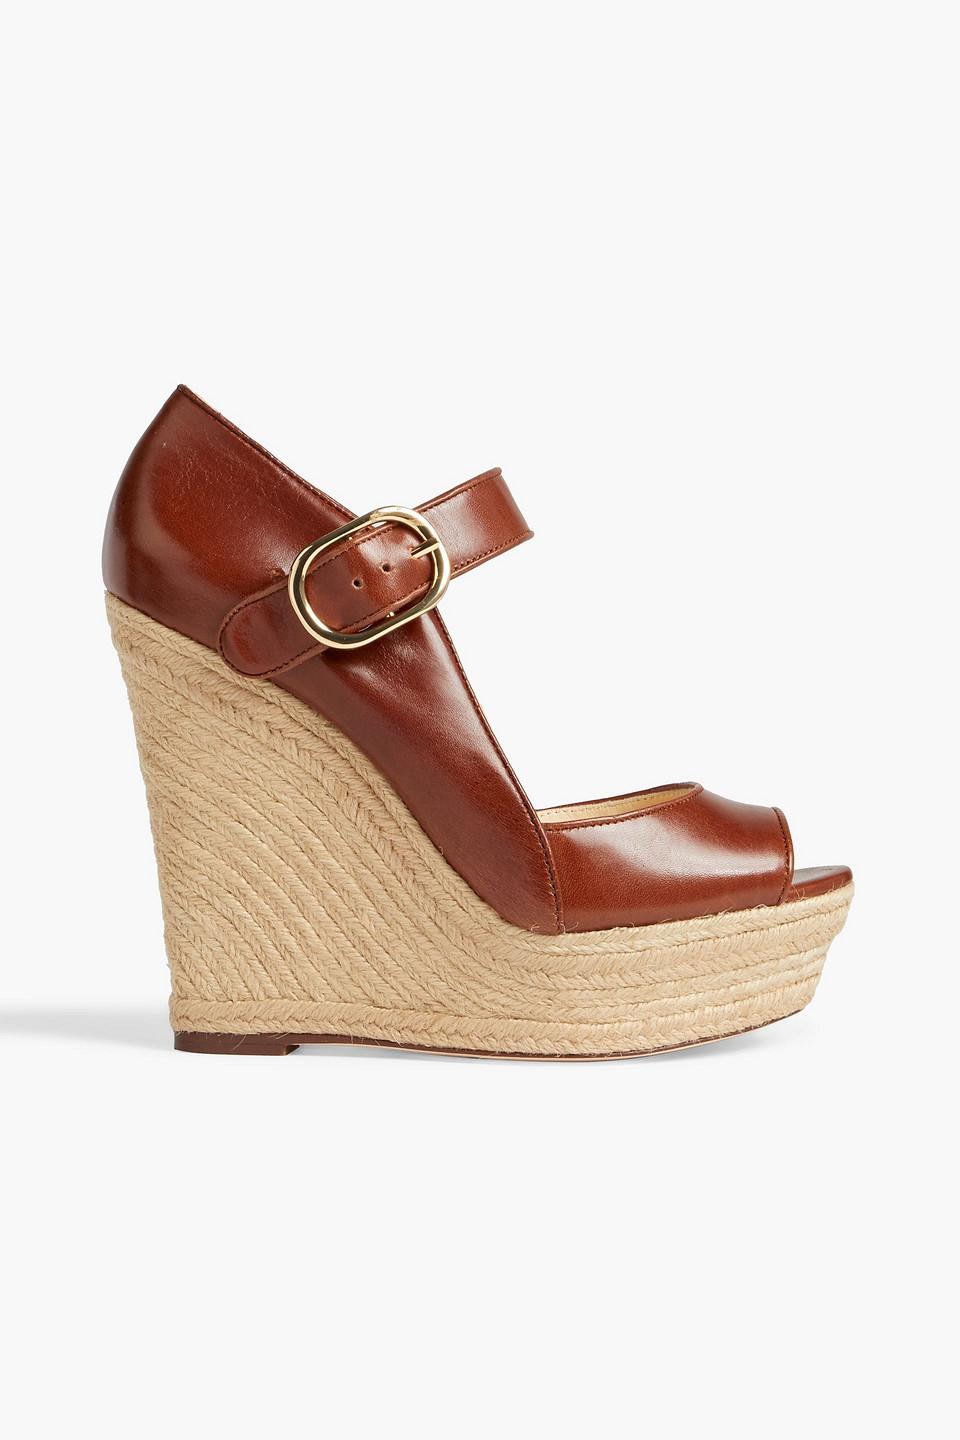 Rachel Zoe Garance Leather Wedge Espadrille Sandals in Brown | Lyst